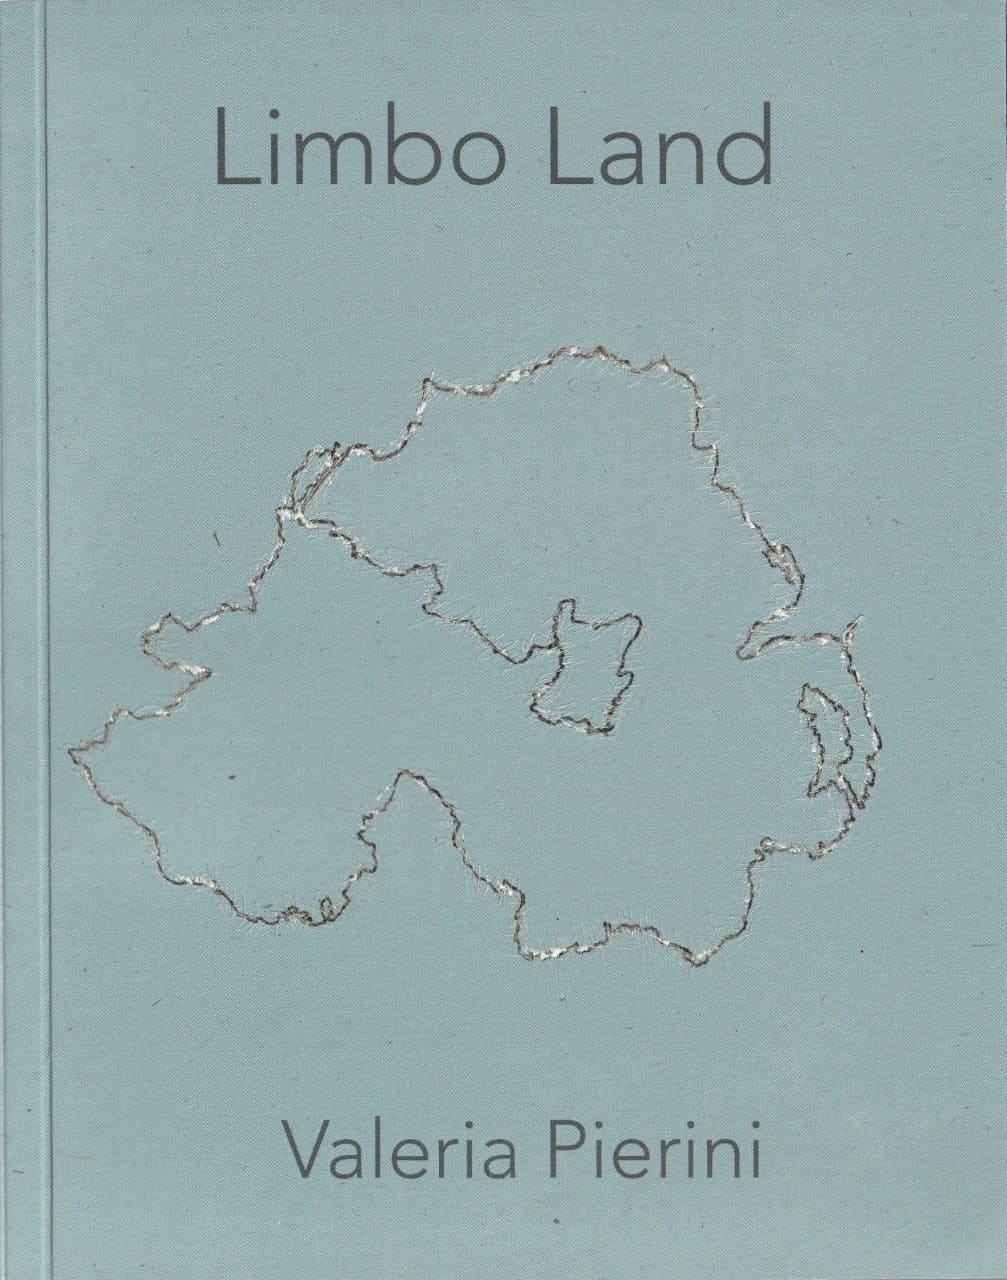 Limbo Land, Valeria Pierini